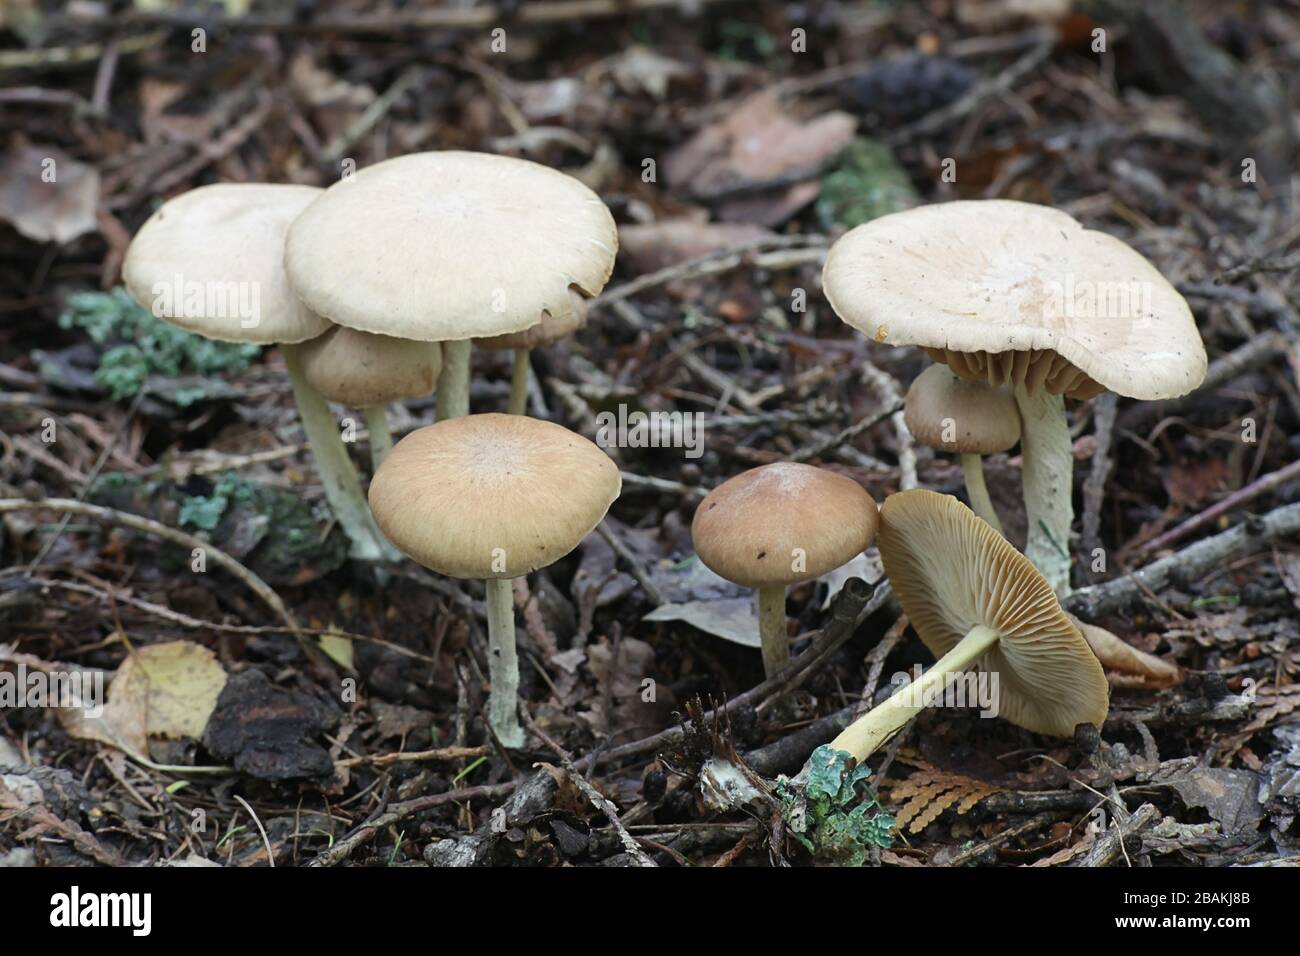 Gymnopus peronatus, known as wood woolly-foot, wild mushrooms from Finland Stock Photo